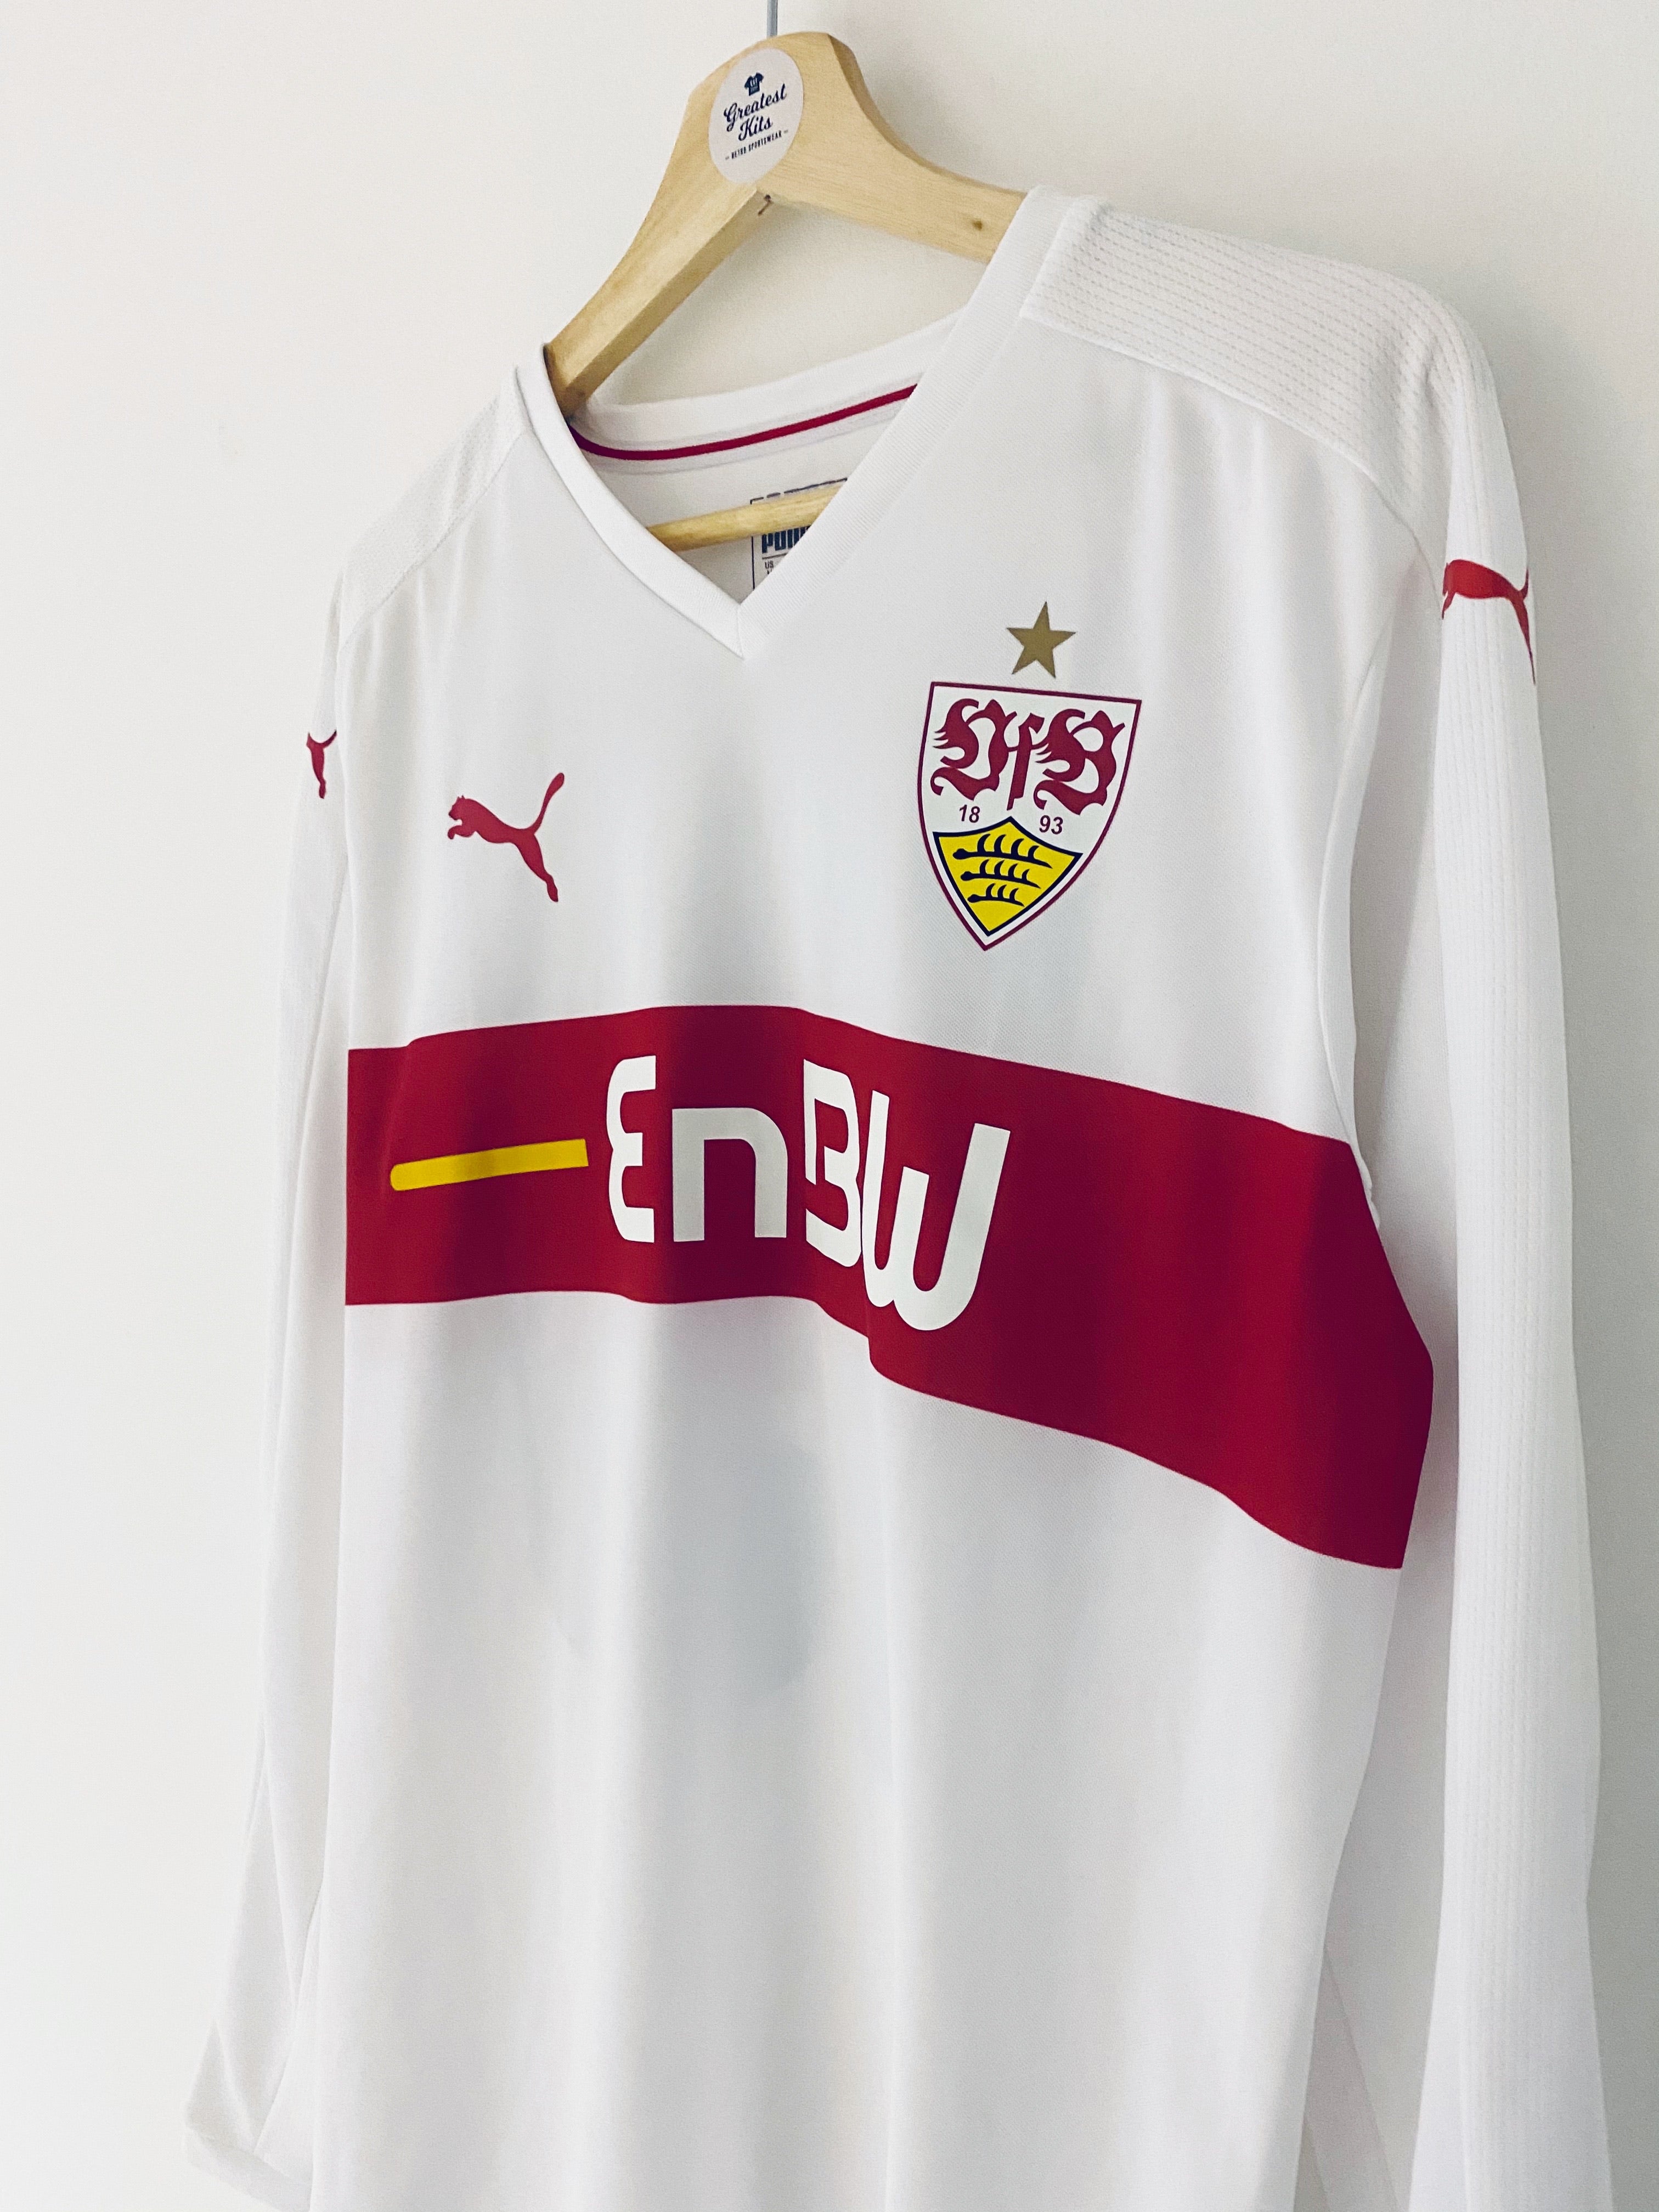 2015/16 Stuttgart U17 *Player Issue* Home L/S Shirt #13 (M) 9/10